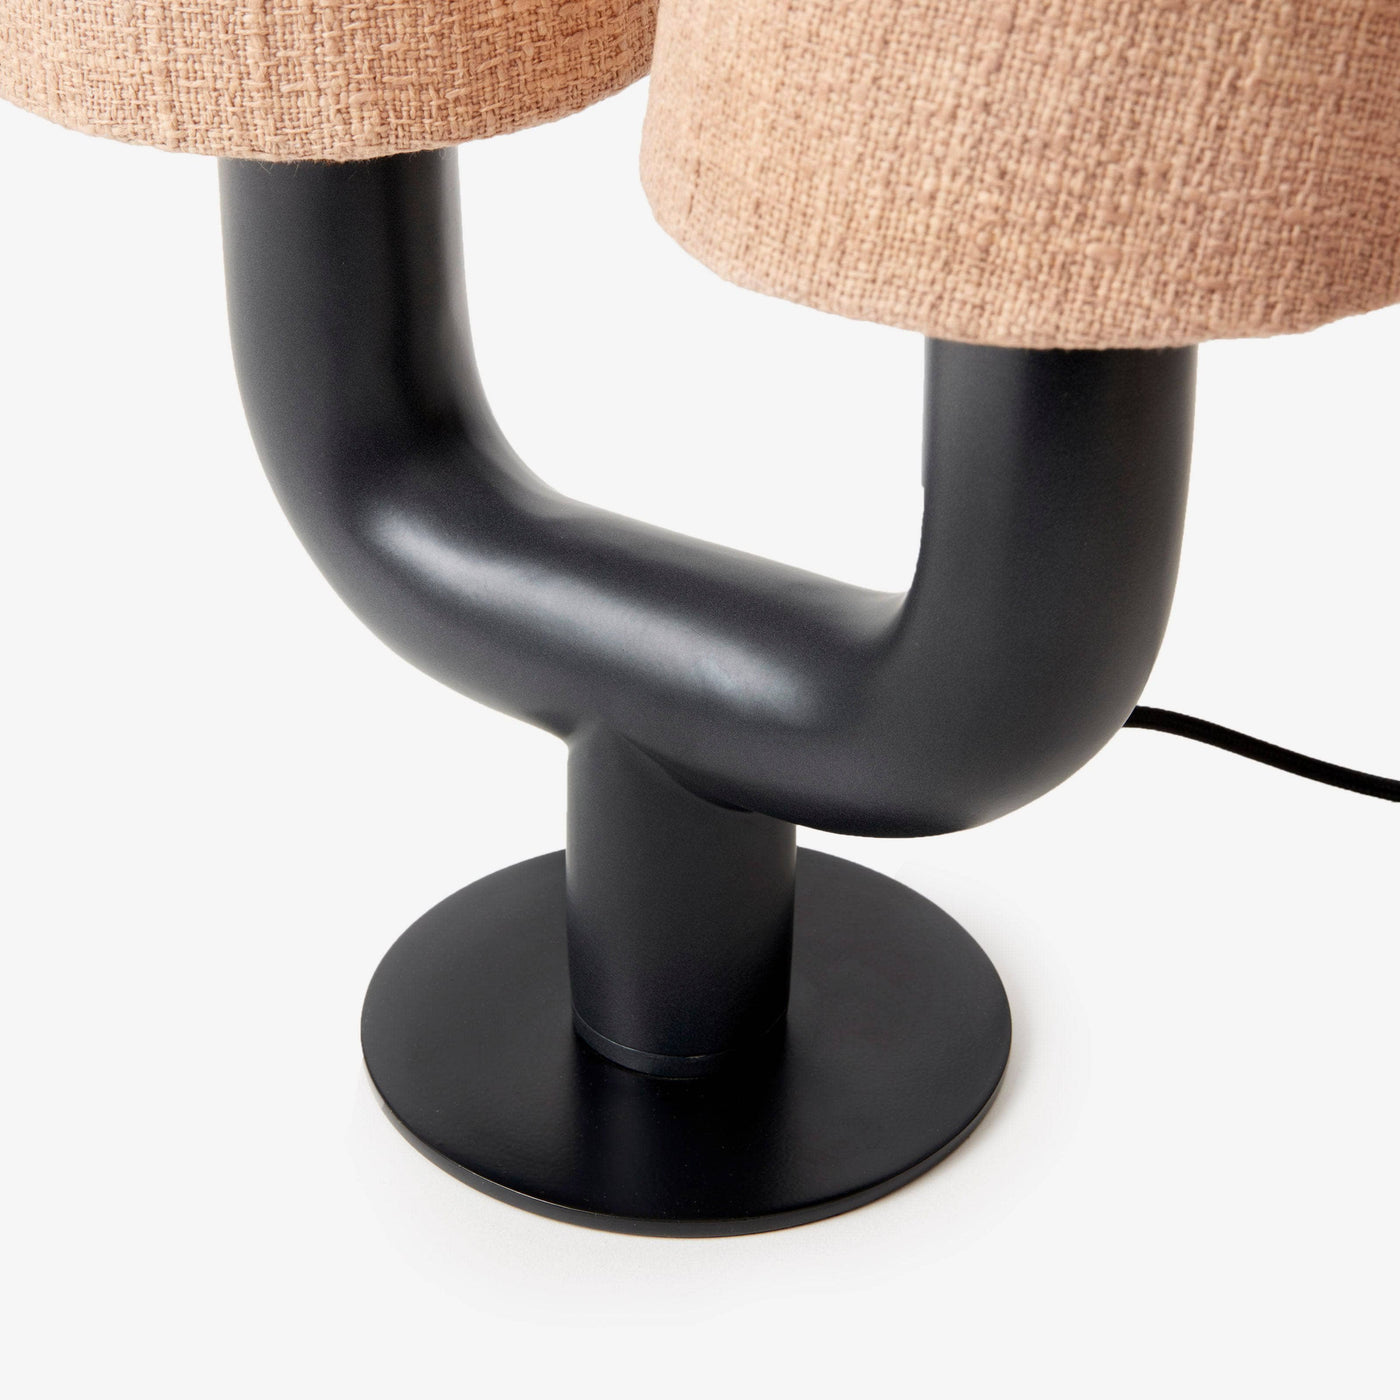 Tiwki Table Lamp, Natural - Black Table & Bedside Lamps sazy.com